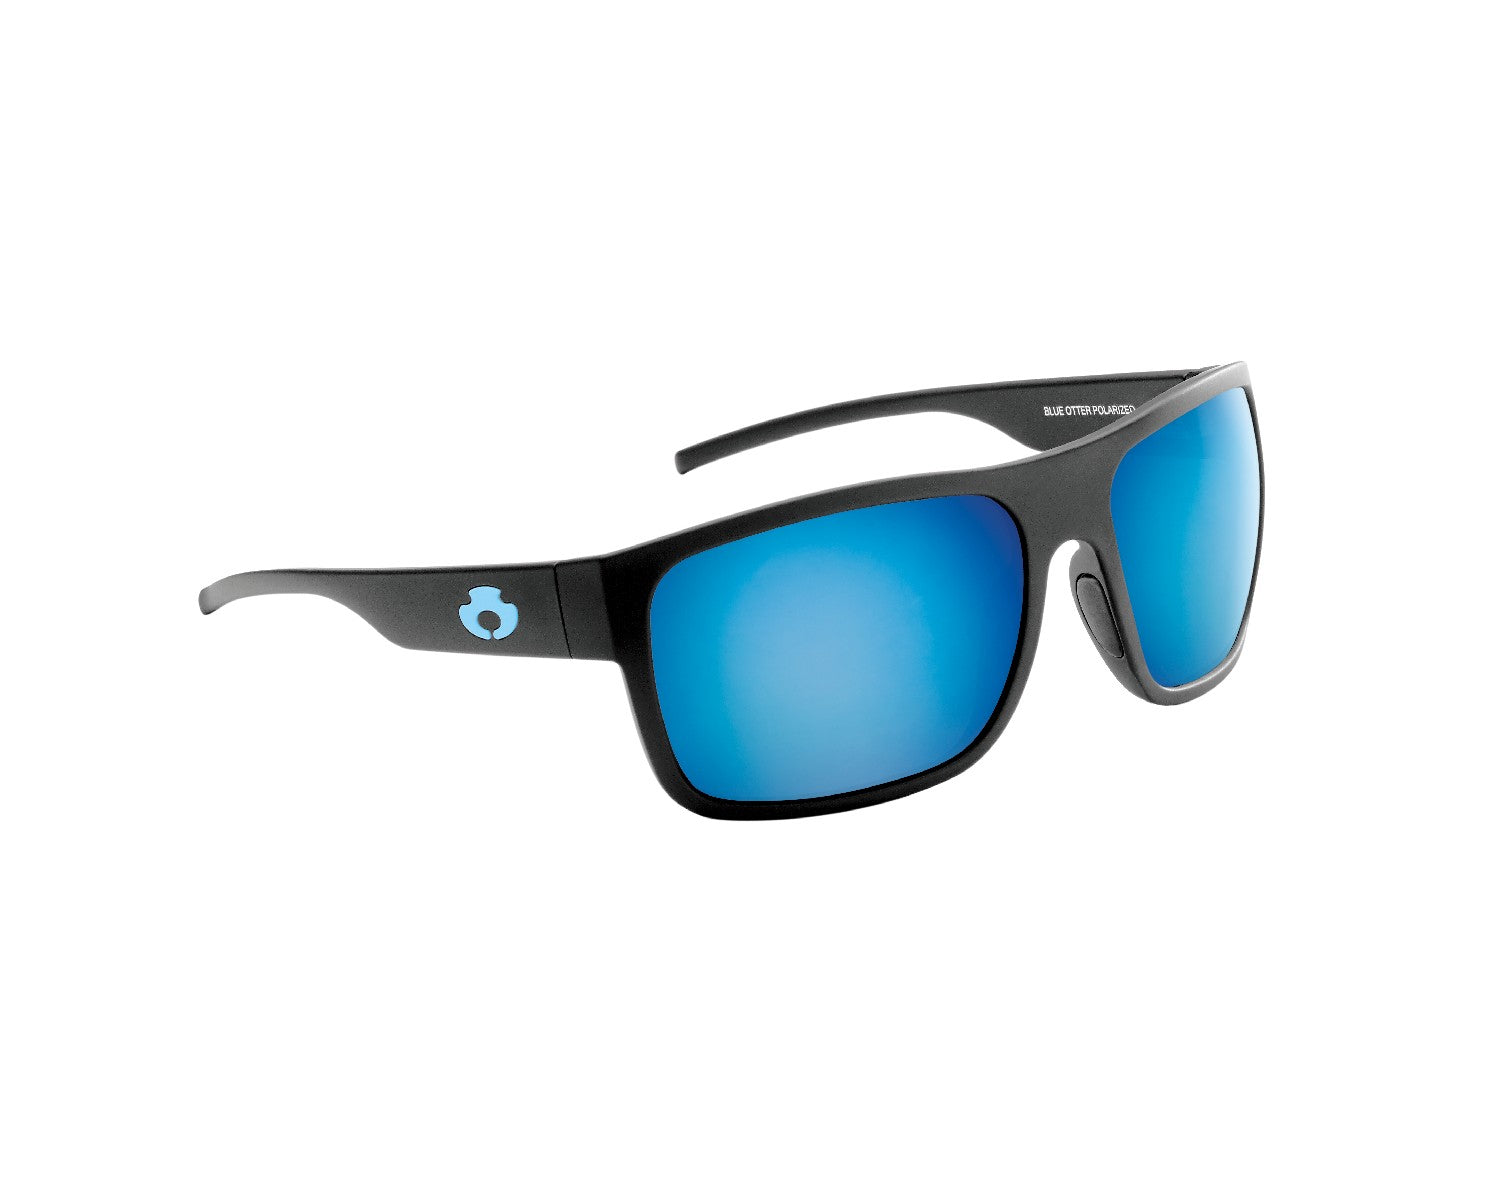 Fin-Nor Hells Bay Sunglasses - Matte Black Frame - Blue Mirror Glass Lens -  Melton Tackle